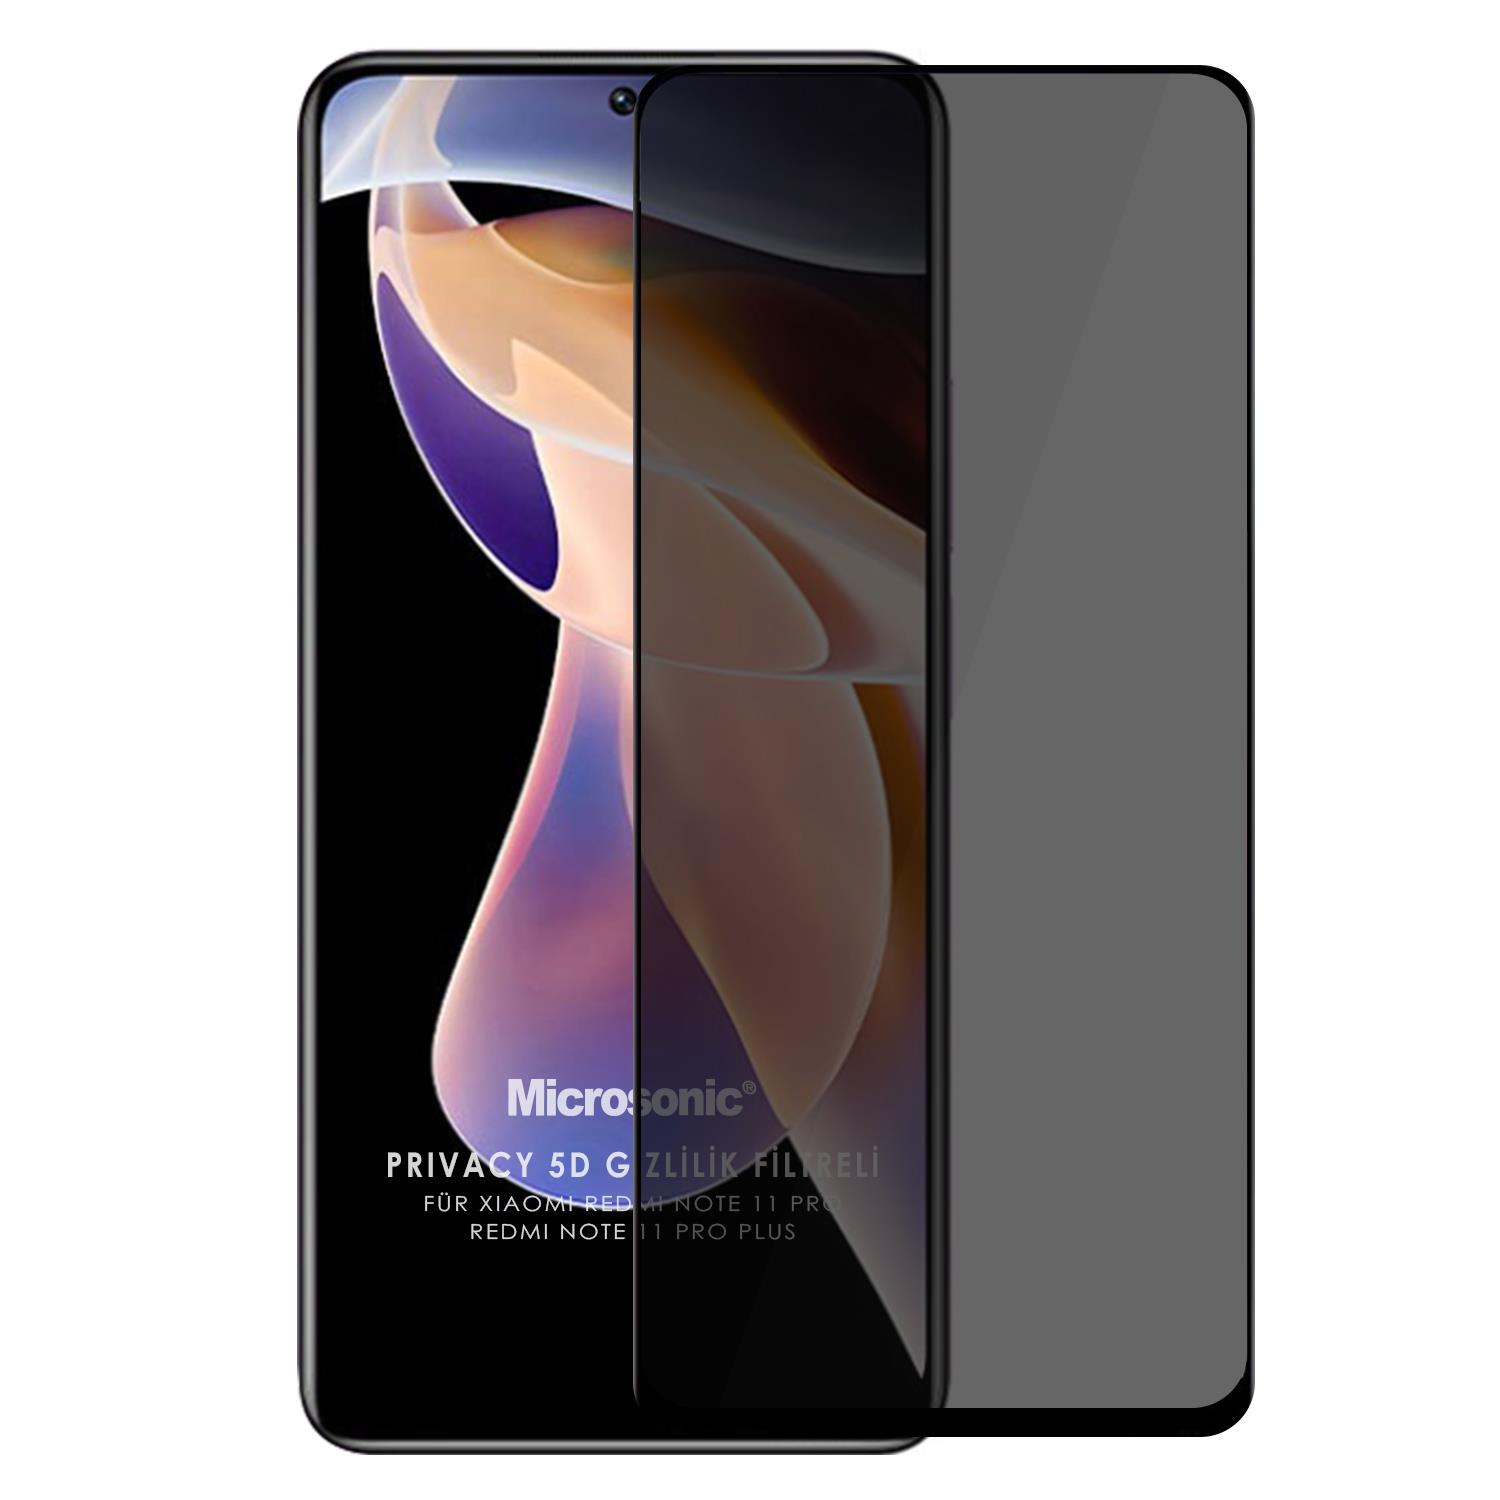 Microsonic Xiaomi Redmi Note 11 Pro Plus Privacy 5D Gizlilik Filtreli Cam Ekran Koruyucu Siyah